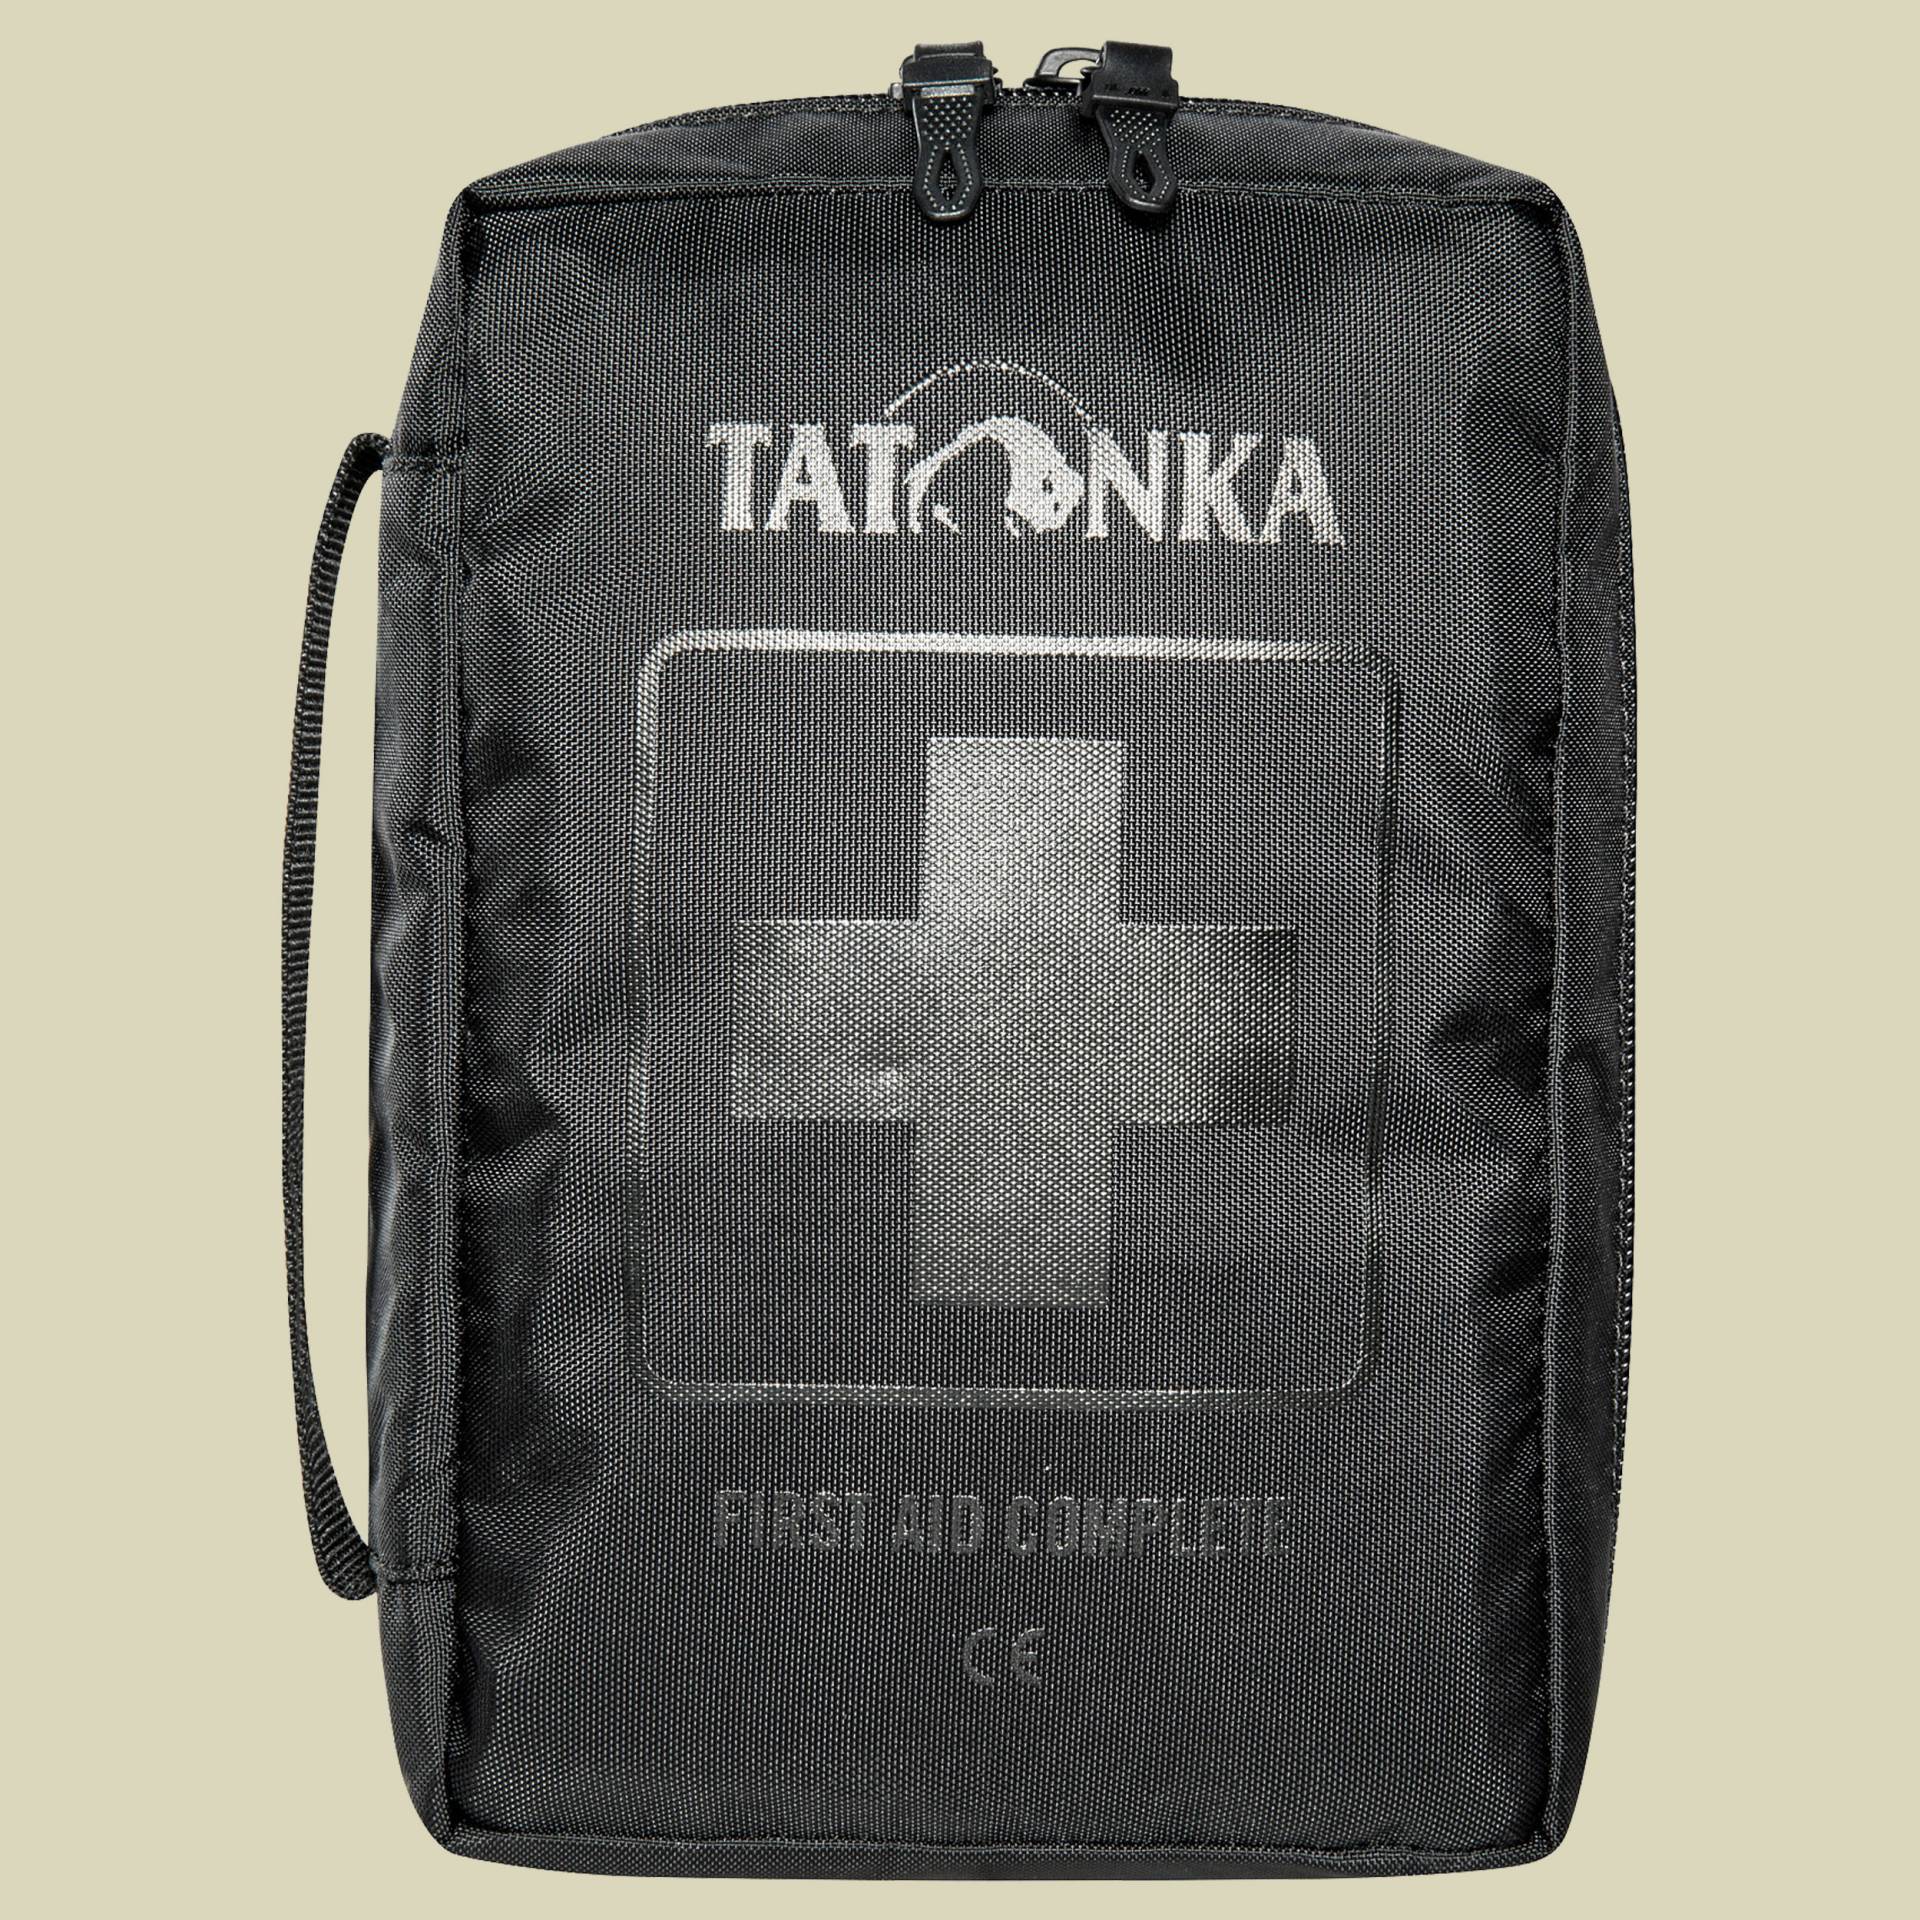 First Aid Complete Farbe black von Tatonka